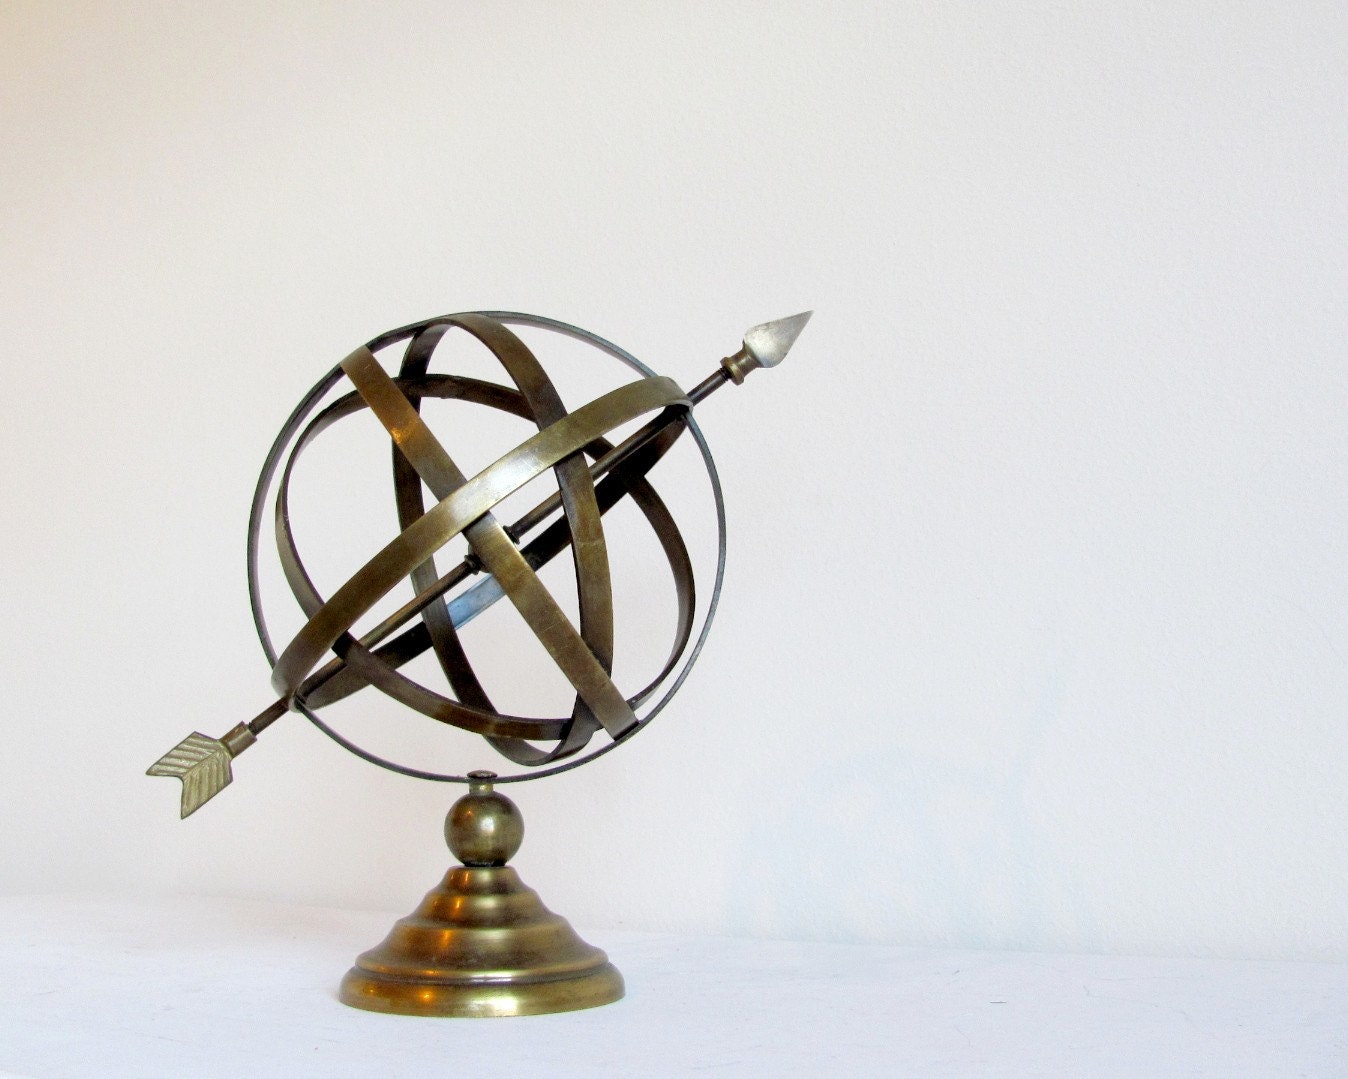 Vintage brass armillary sphere sundial